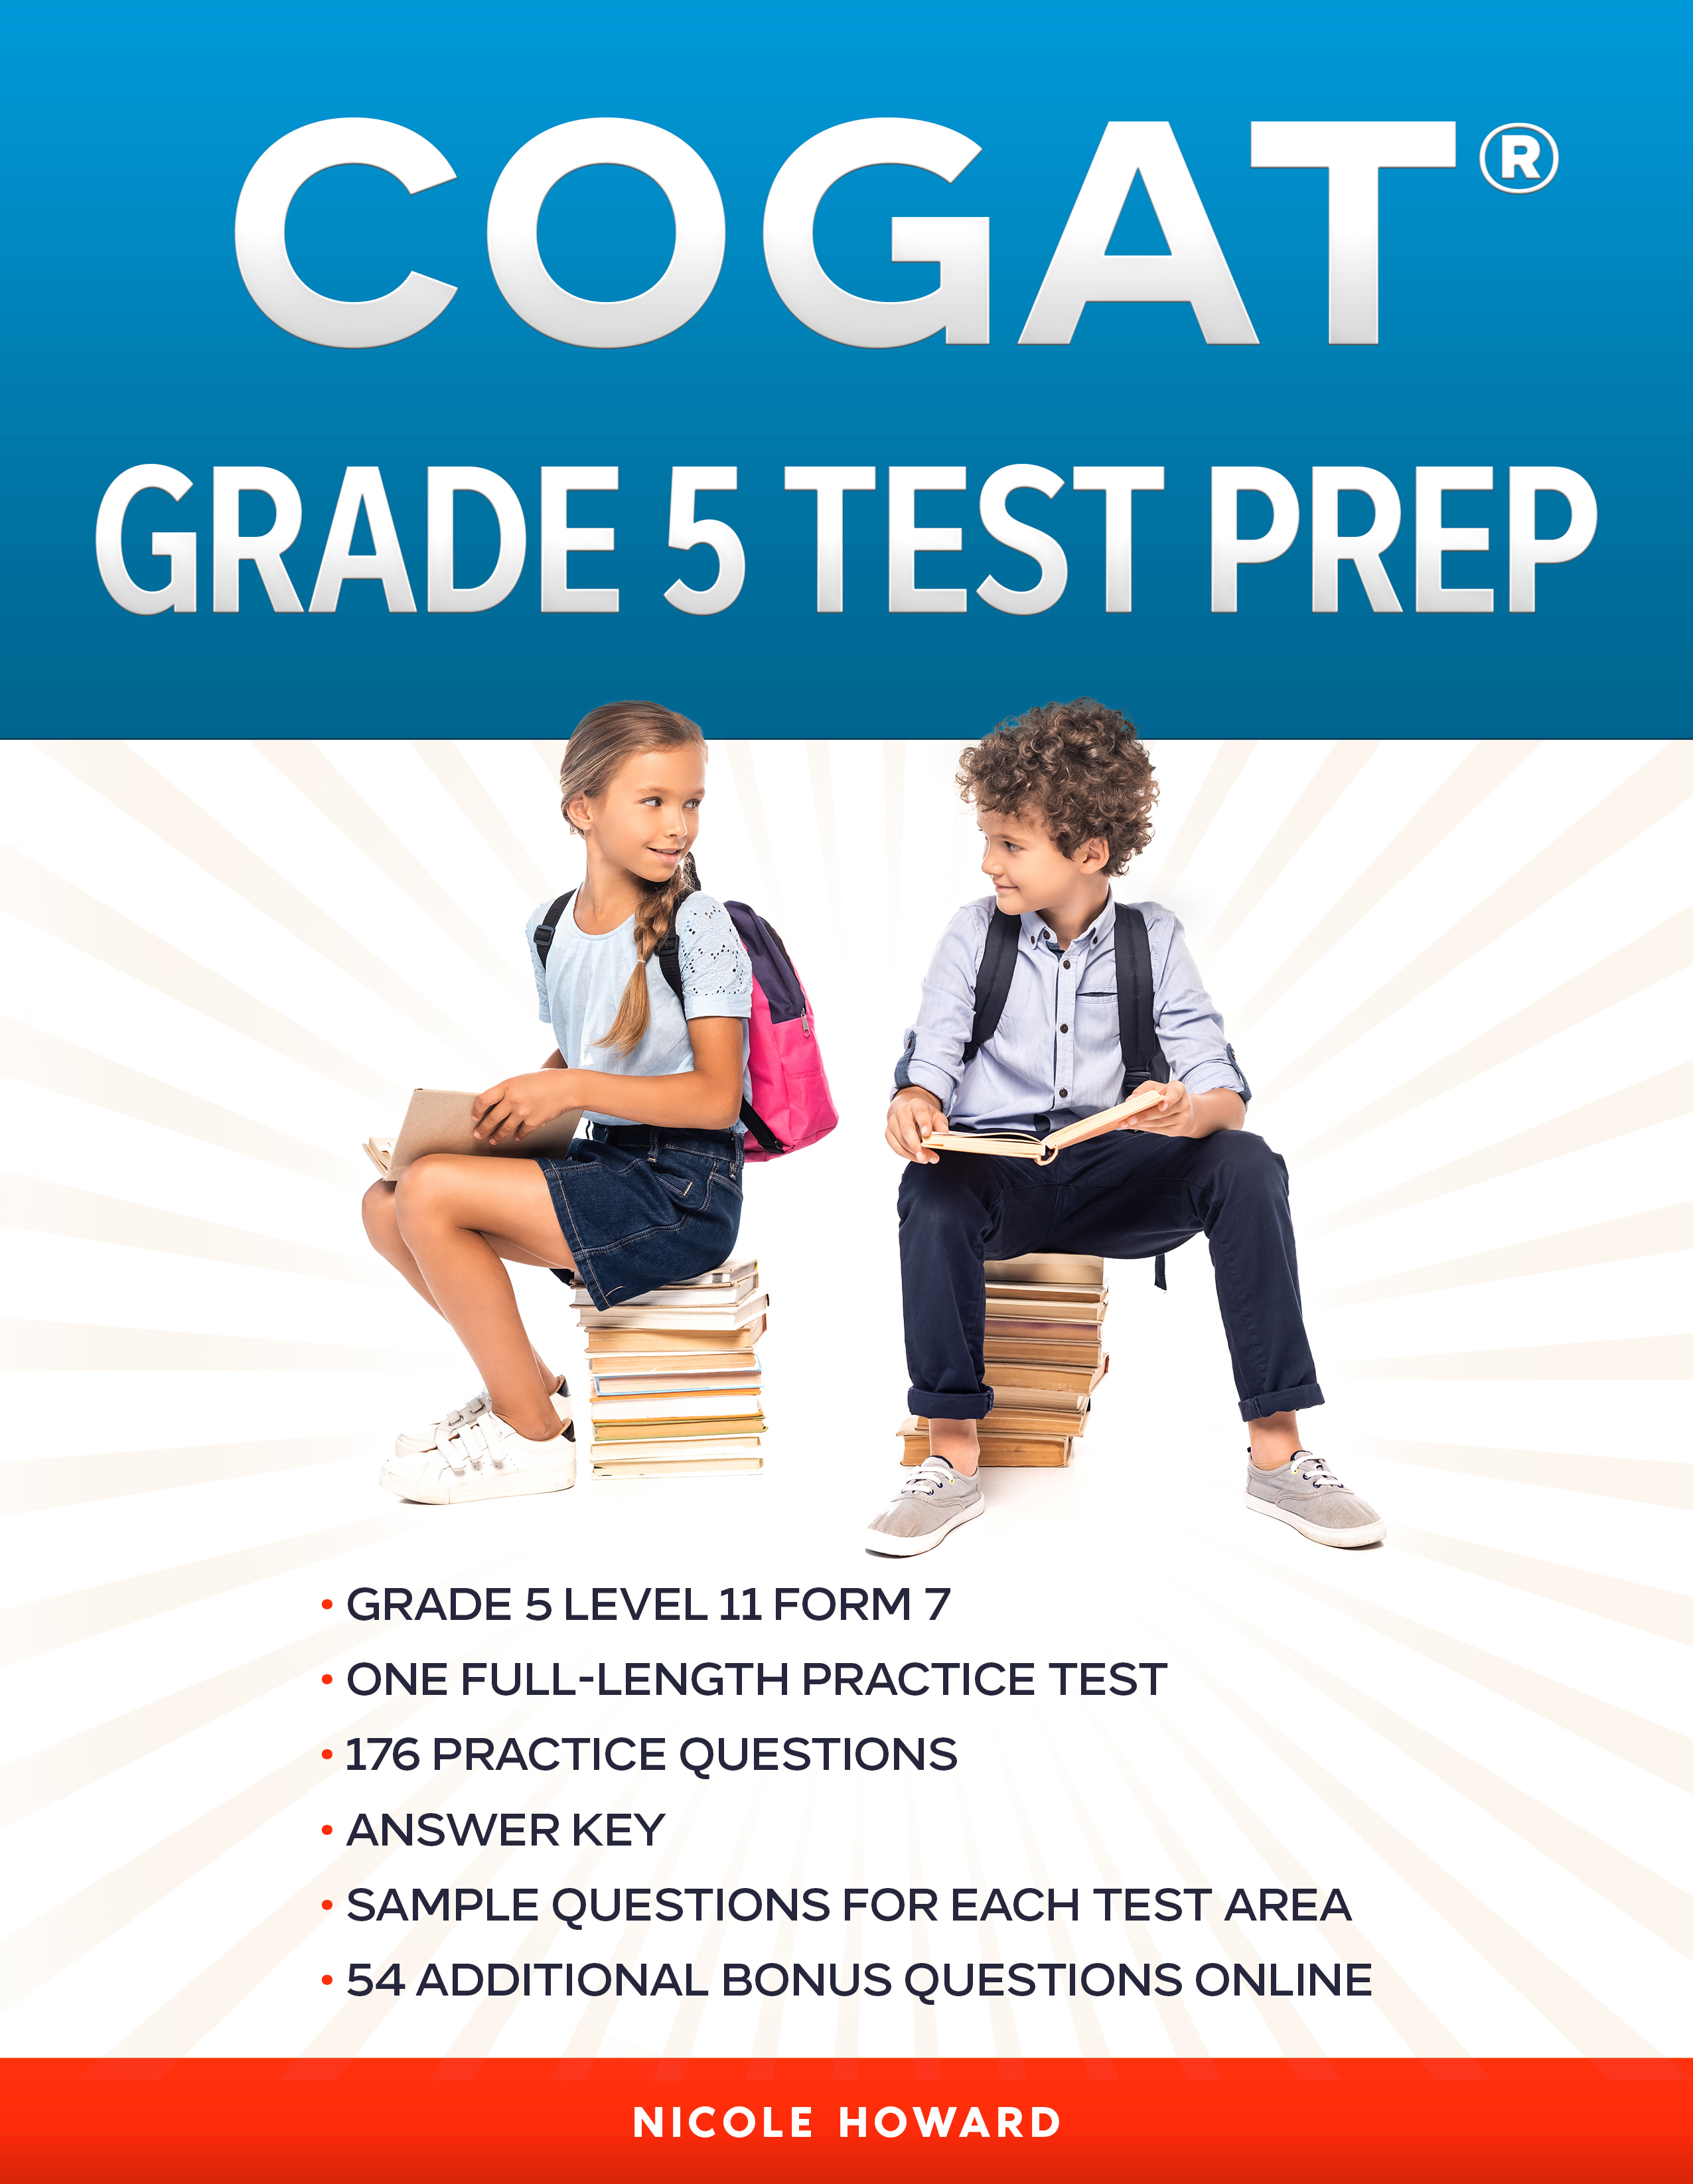 COGAT GRADE 5 TEST PREP